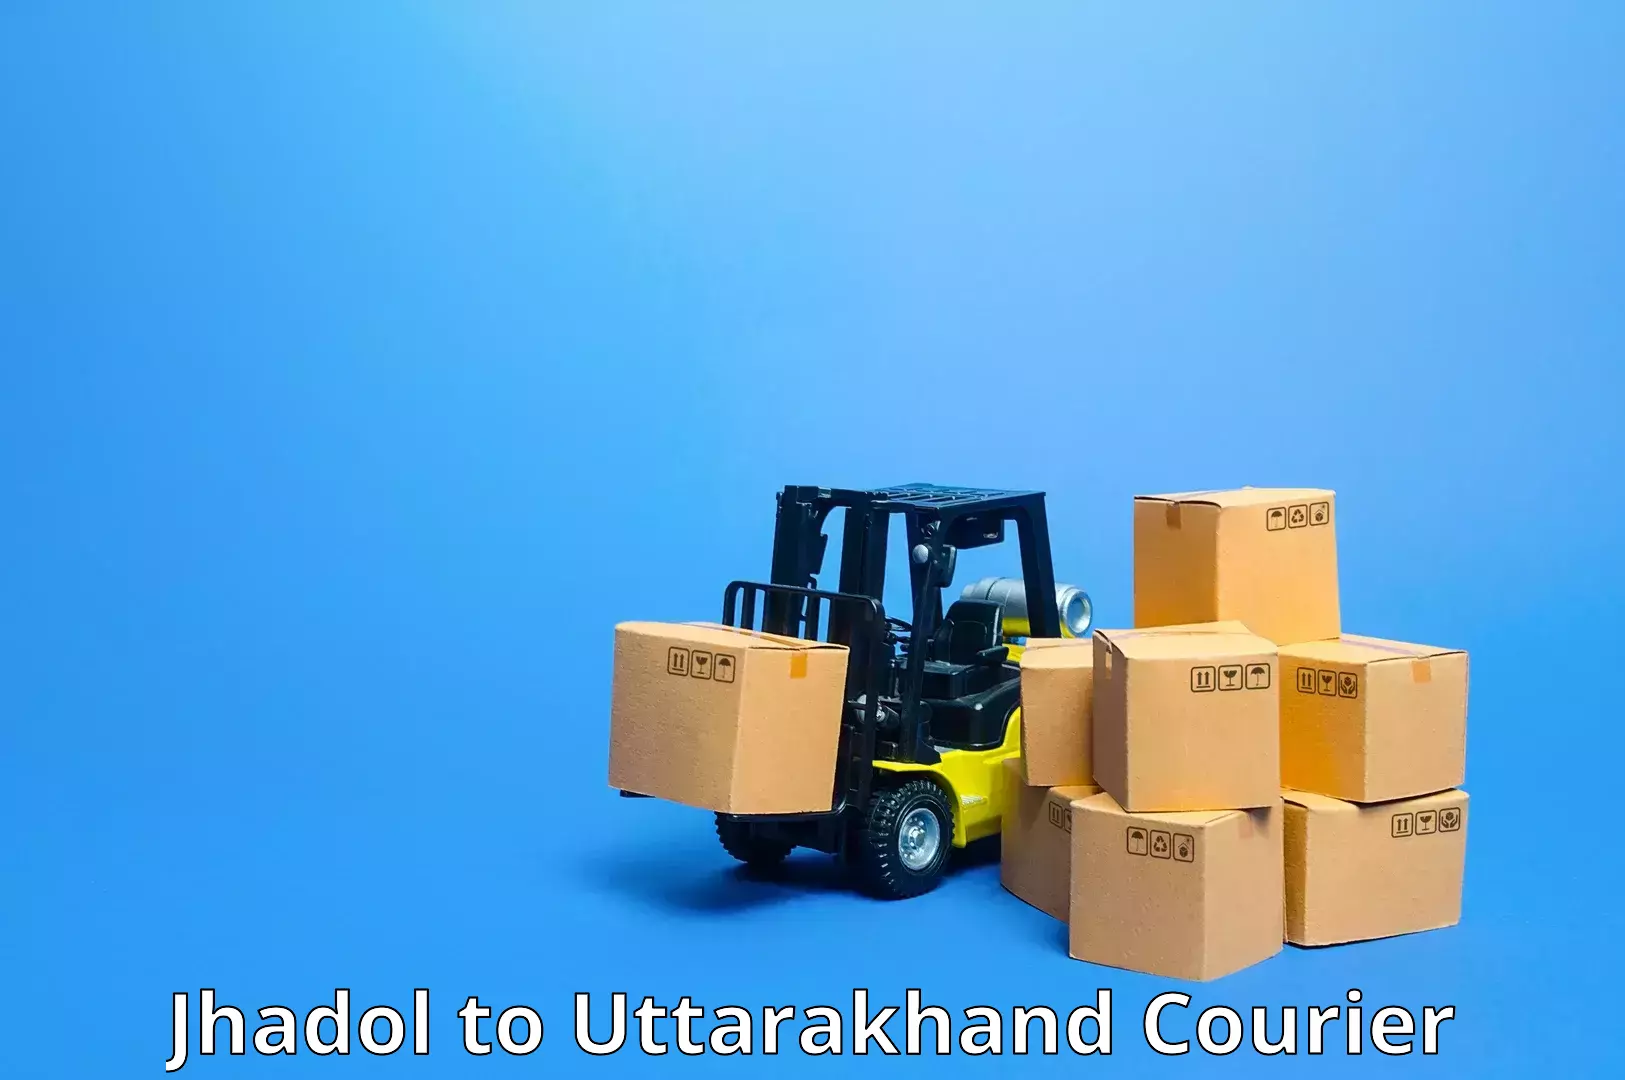 Parcel handling and care Jhadol to Uttarakhand